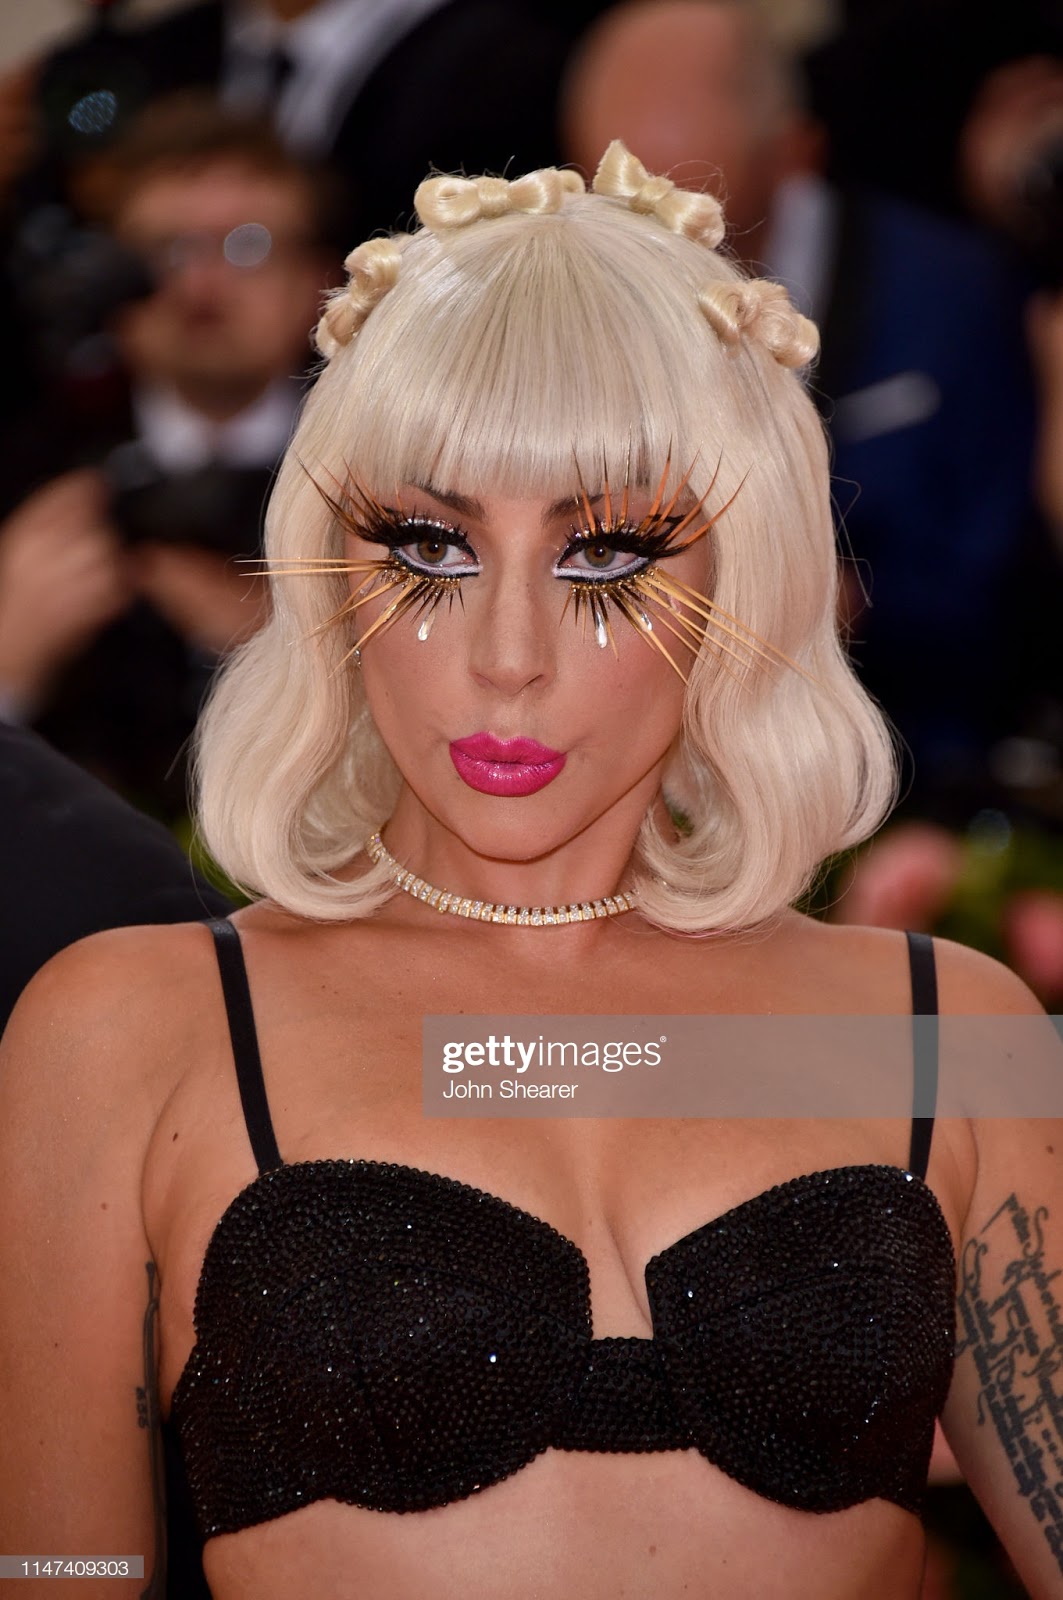 Get the makeup look: Lady Gaga at 2019 Met Gala